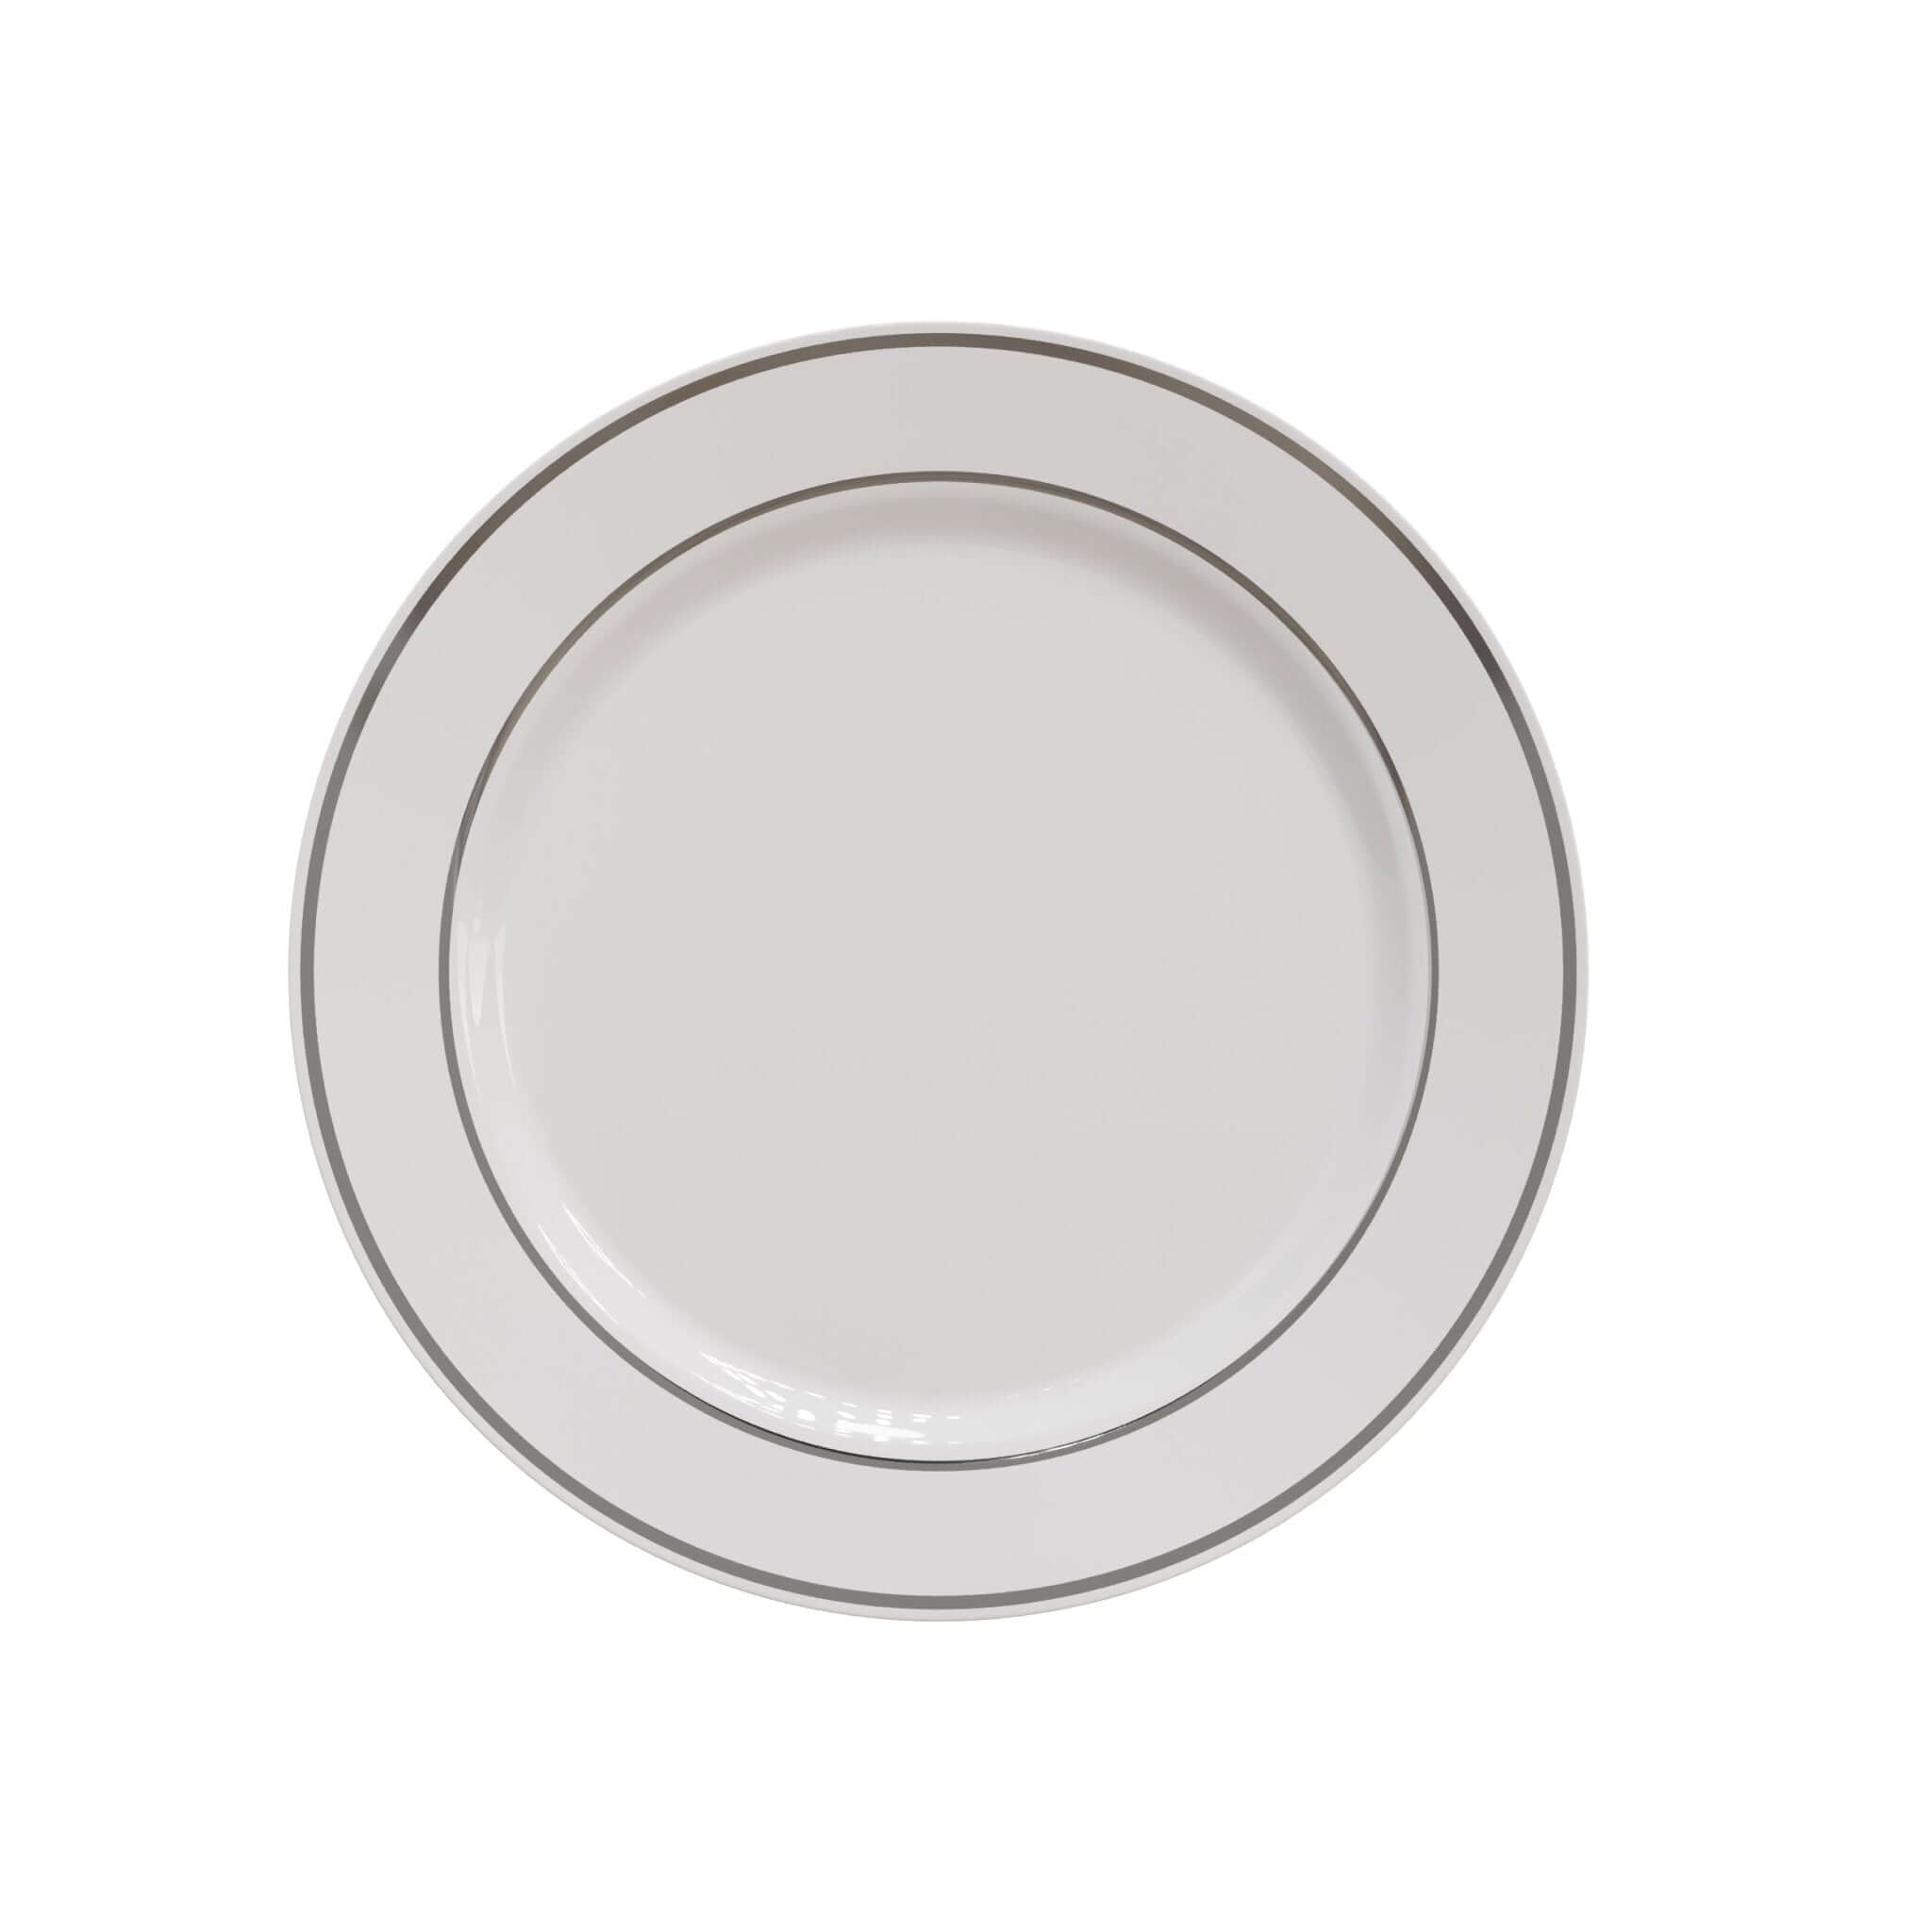 9" White/Silver Line Design Plastic Plates (120 Count) - Yom Tov Settings